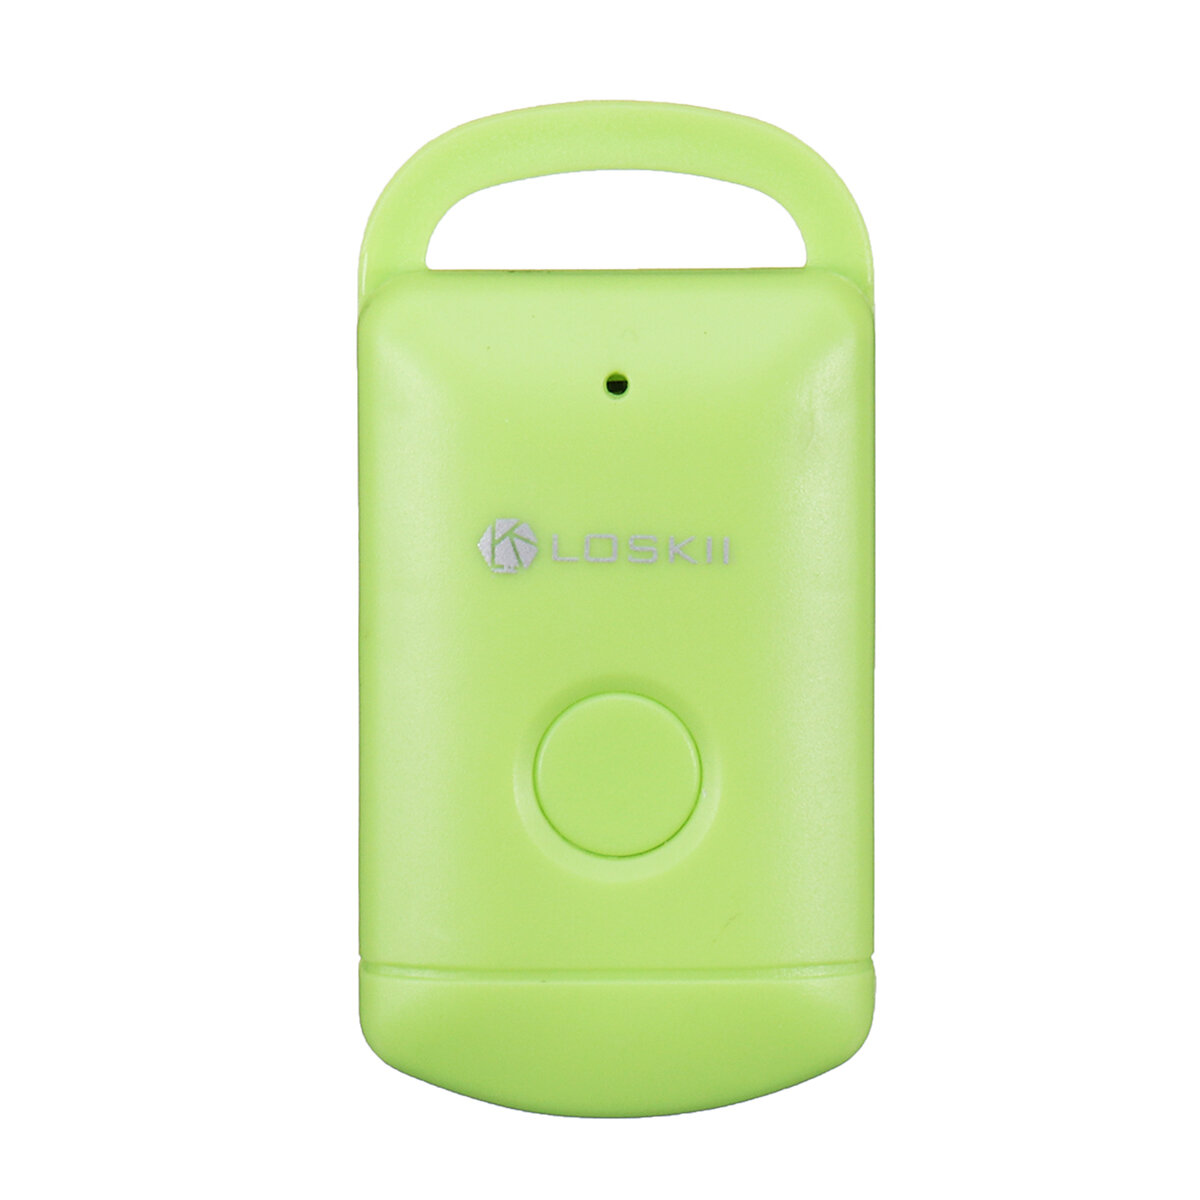 Loskii Pt-20 Mini Multifunctional Bluetooth Wireless Anti Lost Device Alarm Kids Pets Wallet Tracker